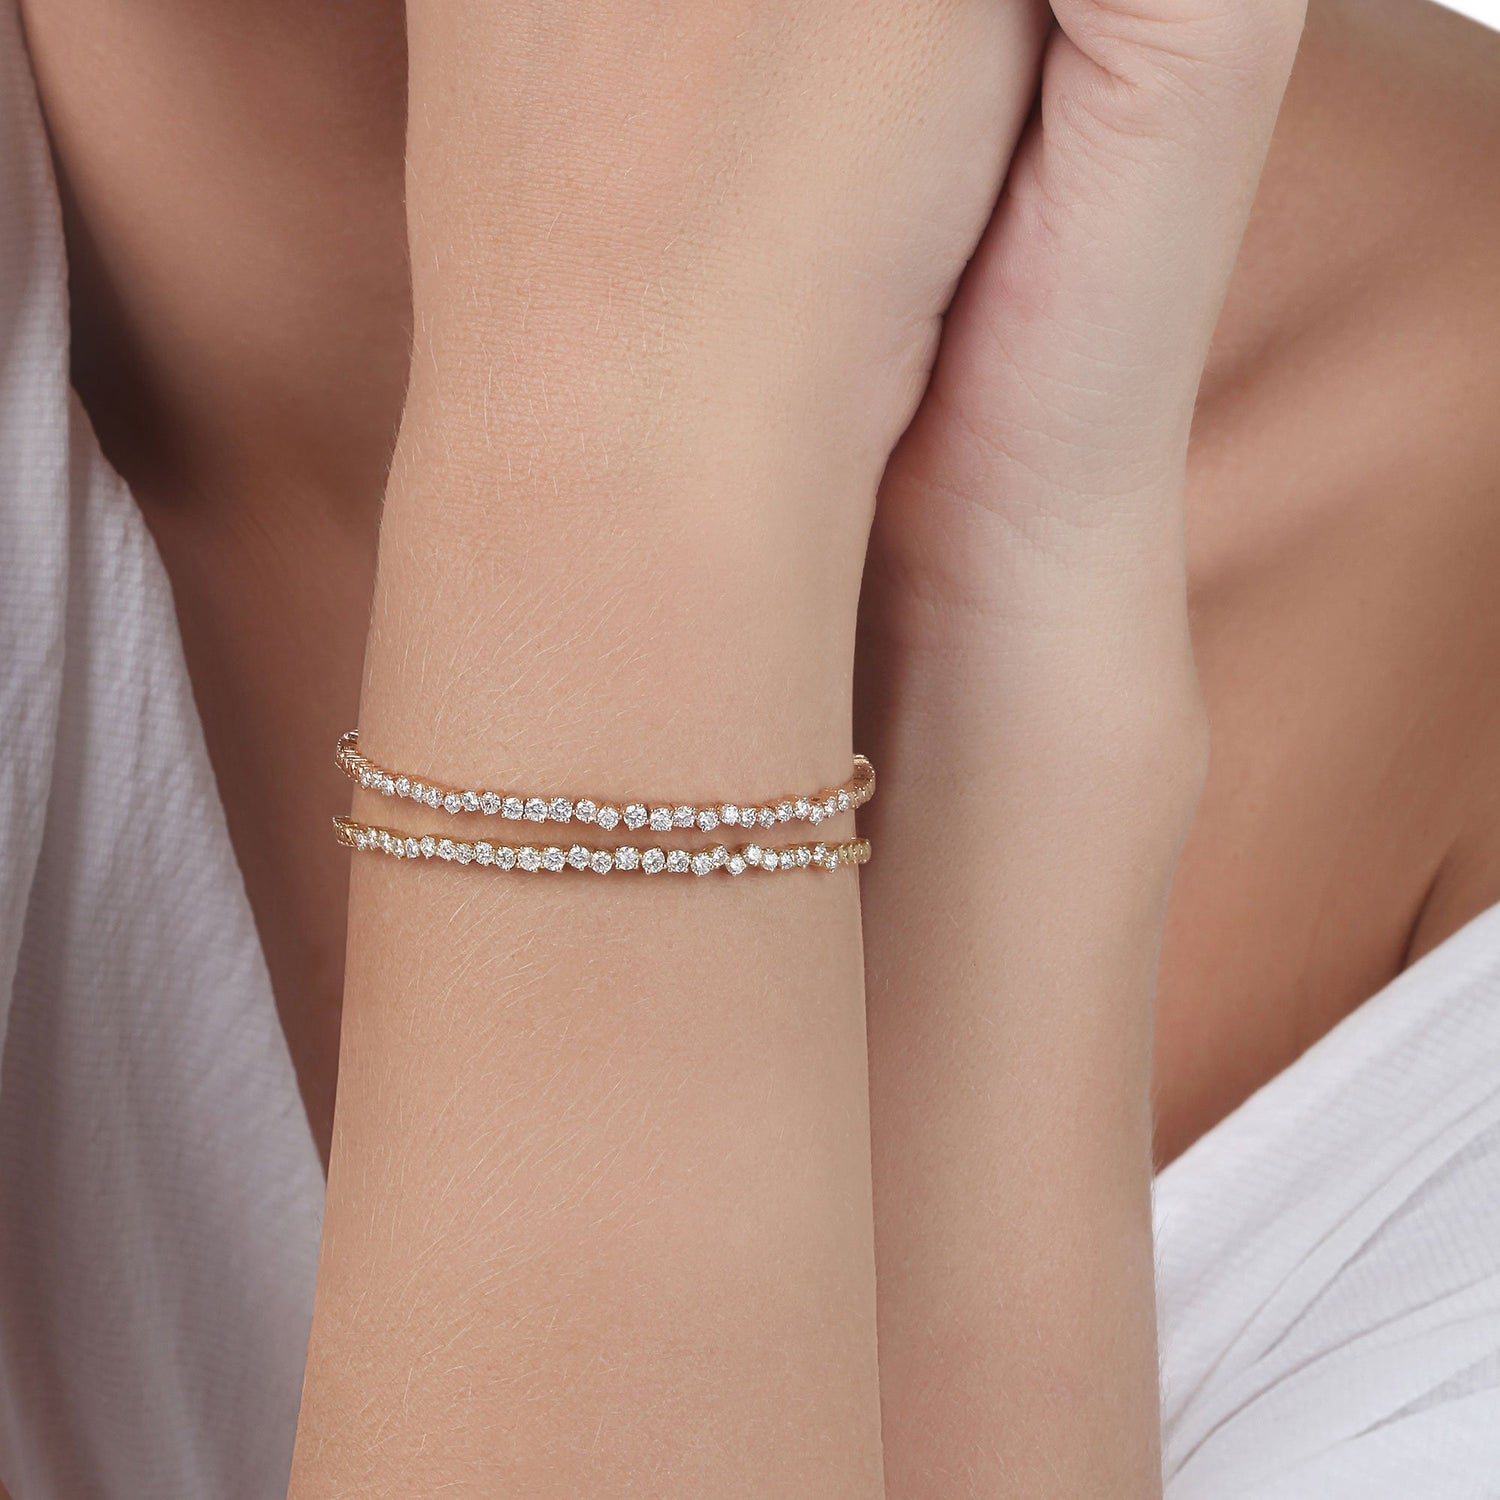 Bridal jewelery set in Dubai | Tennis bracelet in Saudi Arabia